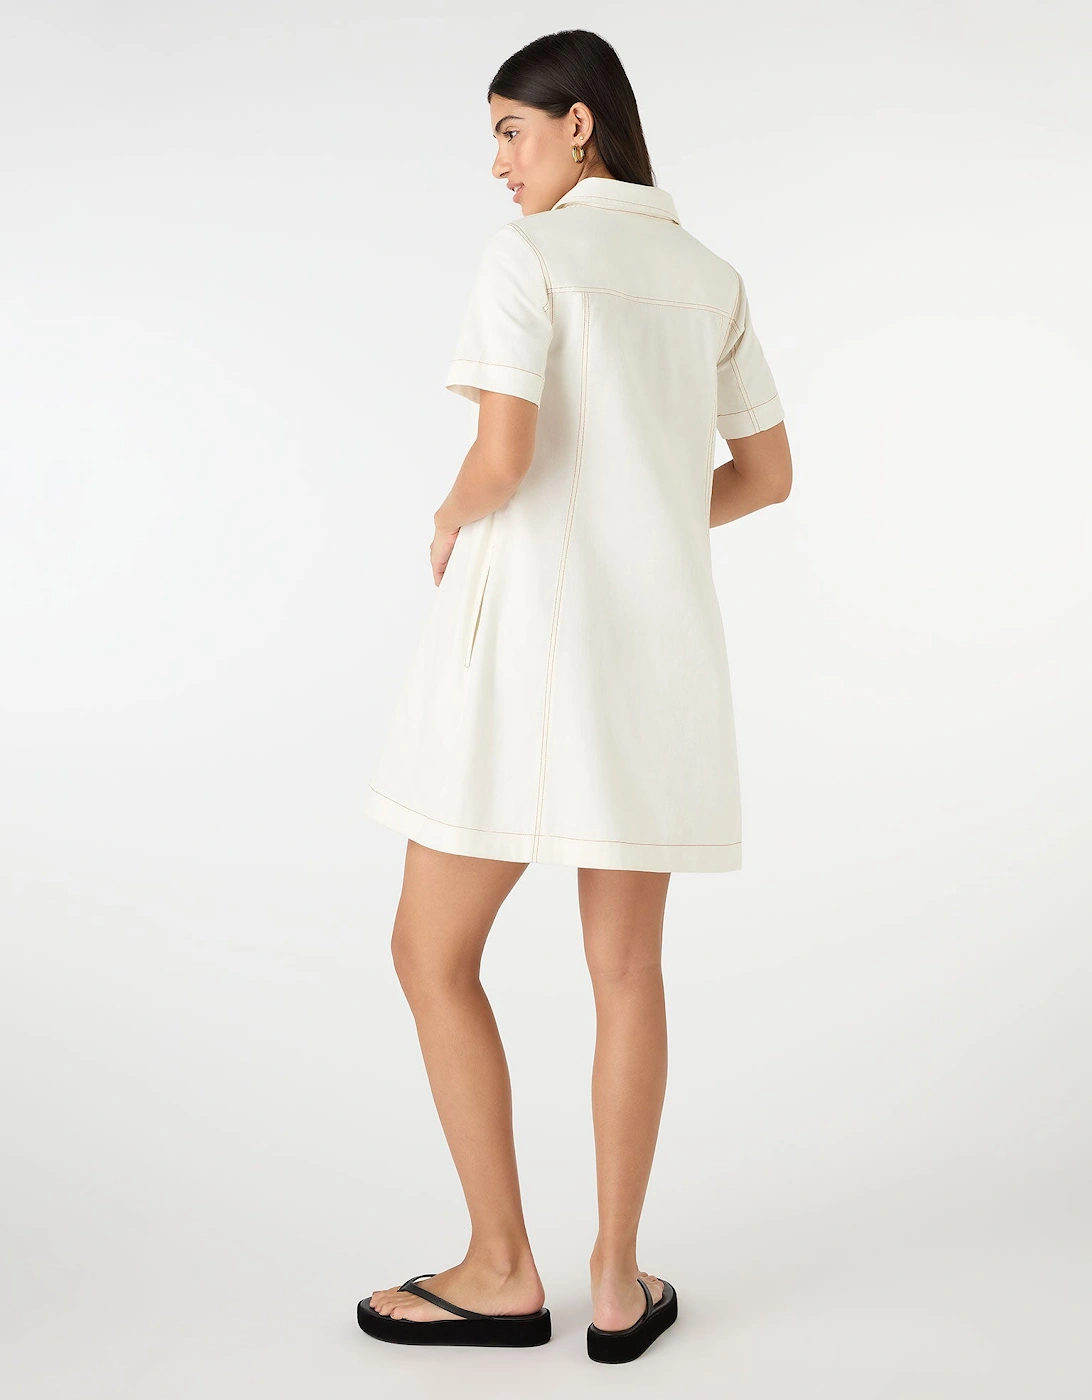 Alexa Mini Dress in Cream